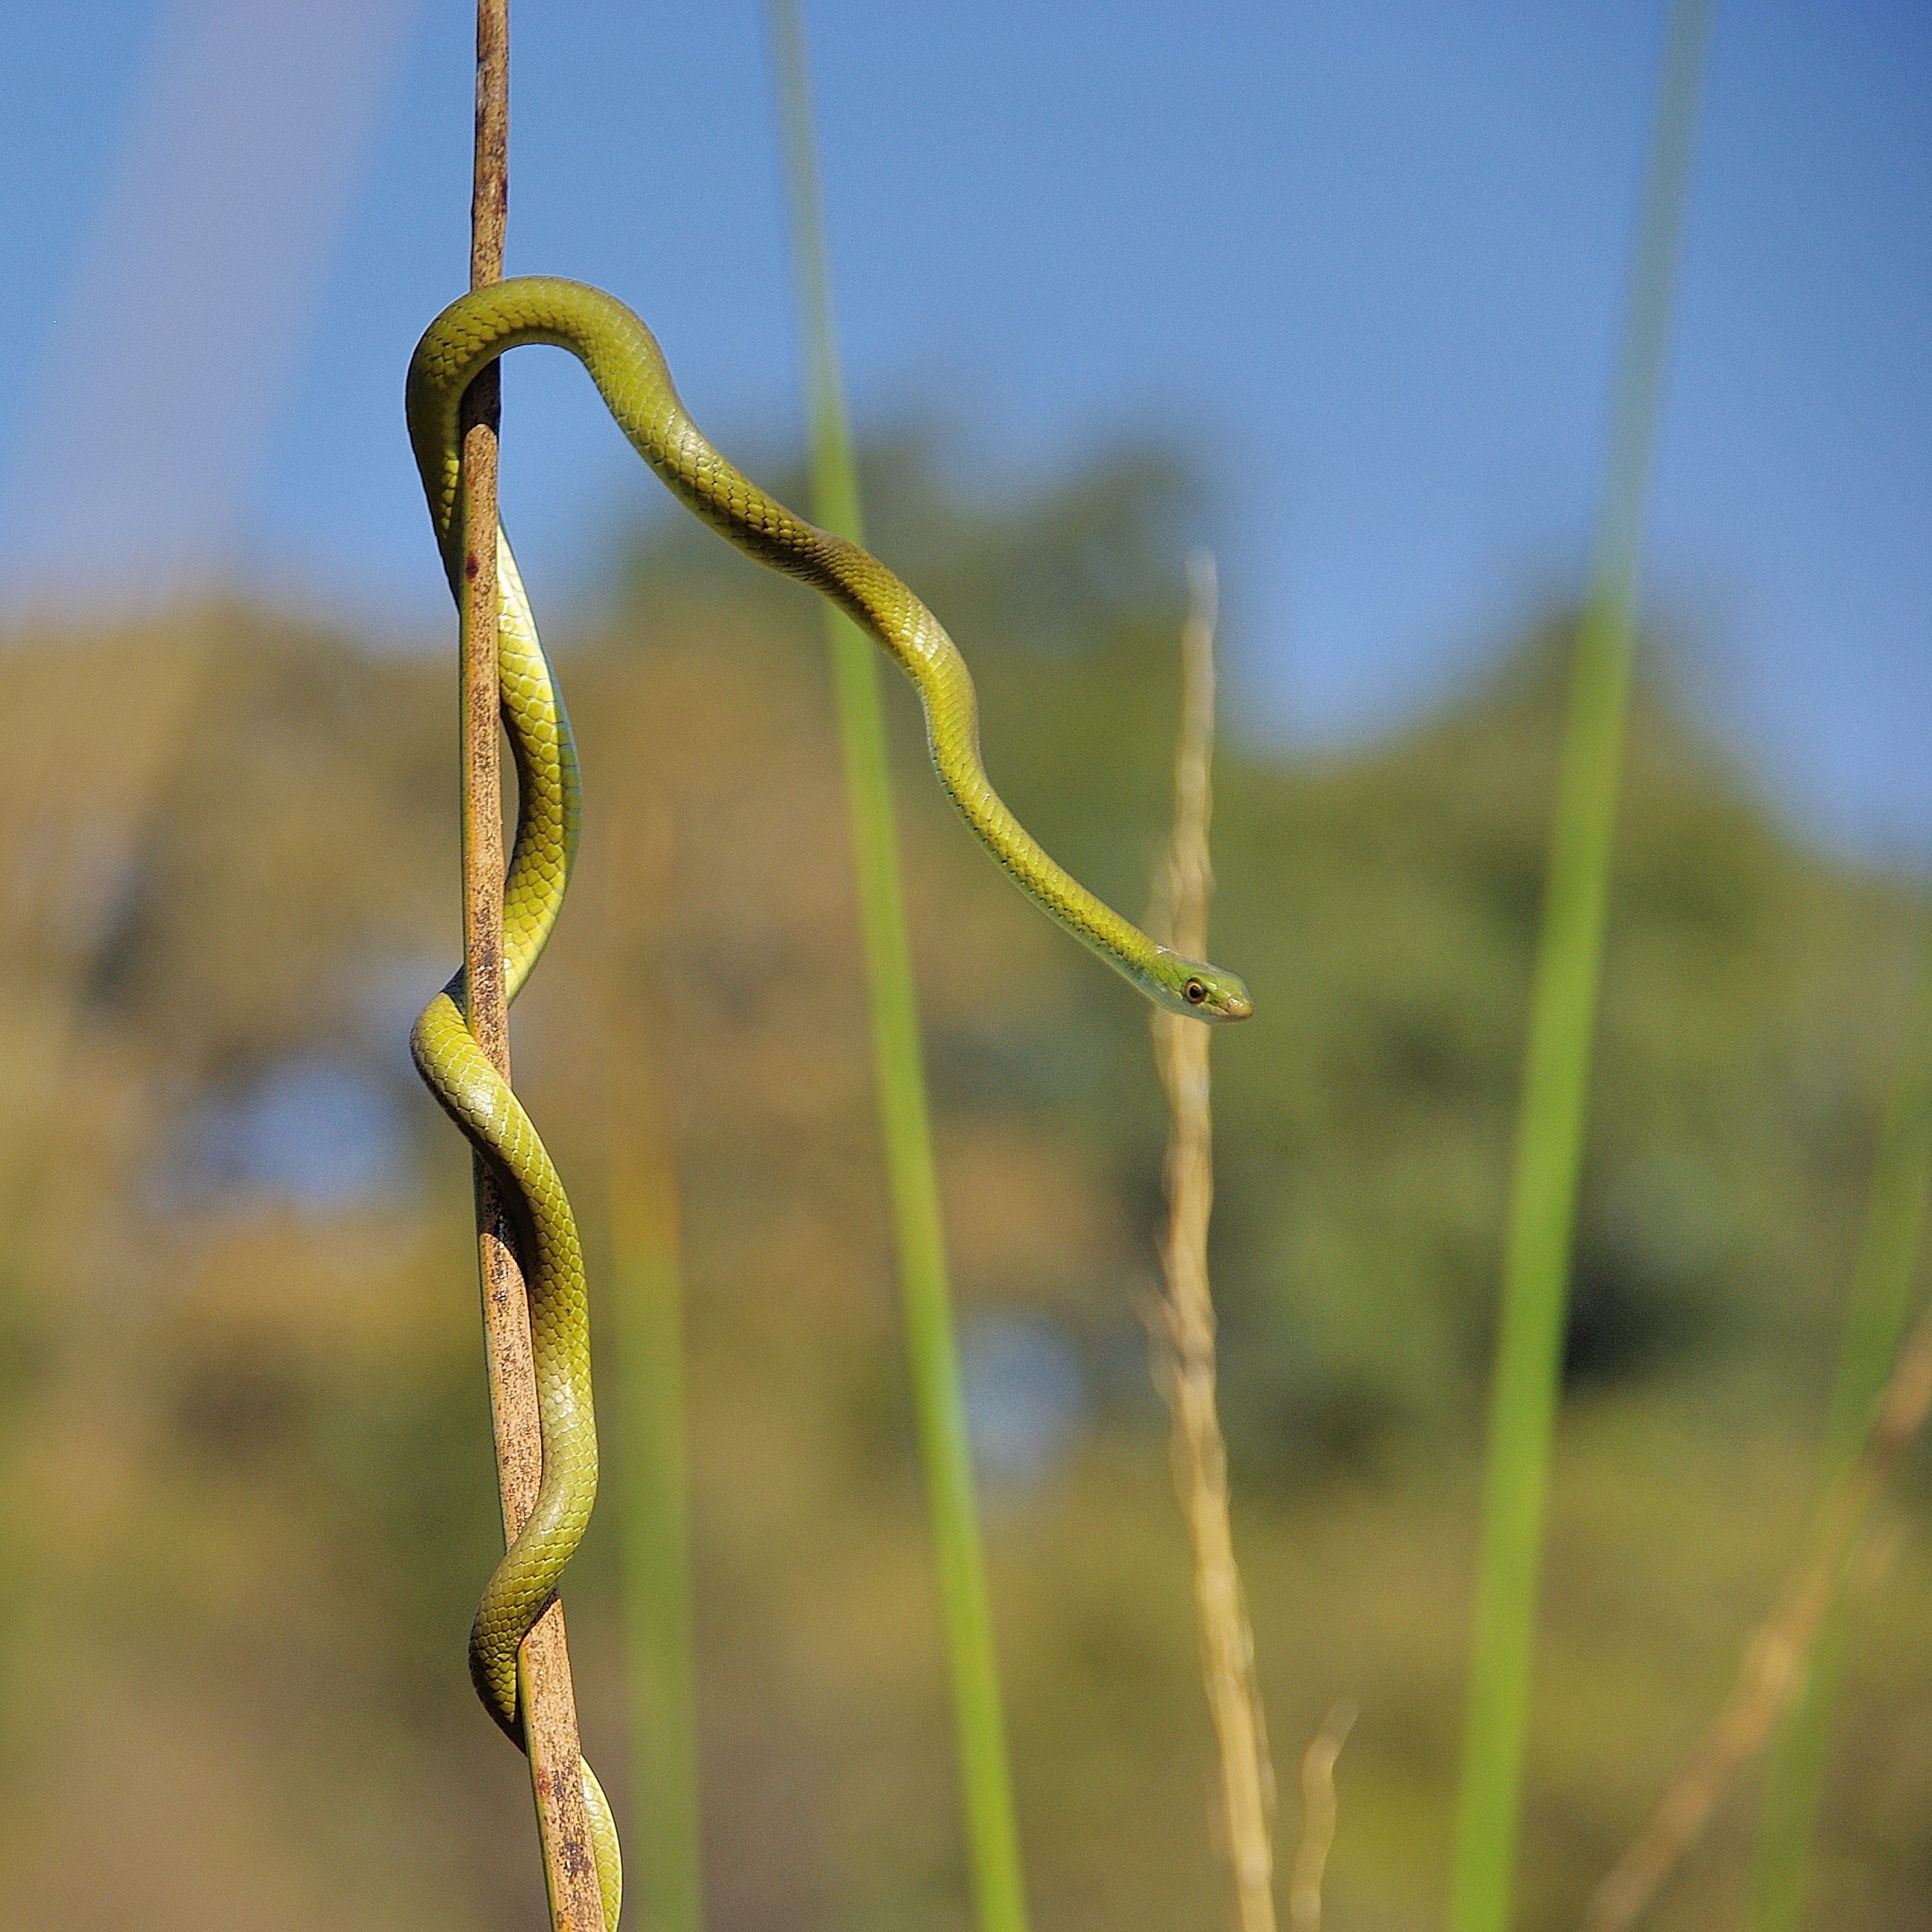 Couleuvre verte du genre Philothamnus, probablement Philothamnus angolensis (Angola green snake) ou Philothamnus irregularis, hologaster ou ornatus. Chief's Camp, Delta de l'Okavango, Botswana.